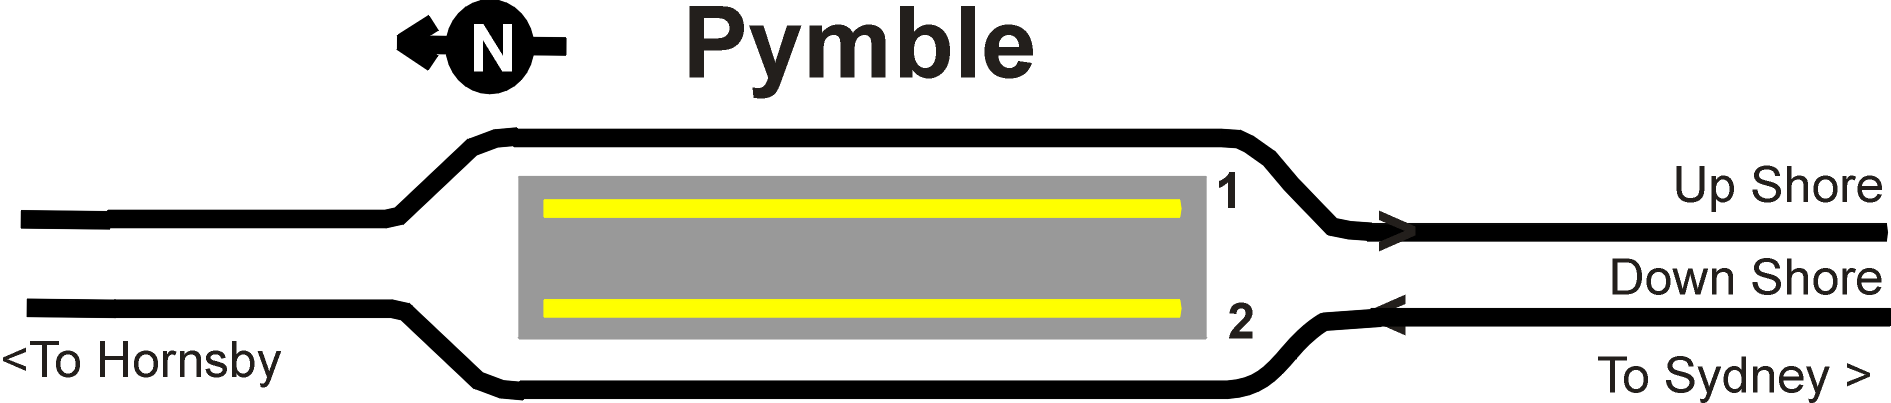 Pymble Station